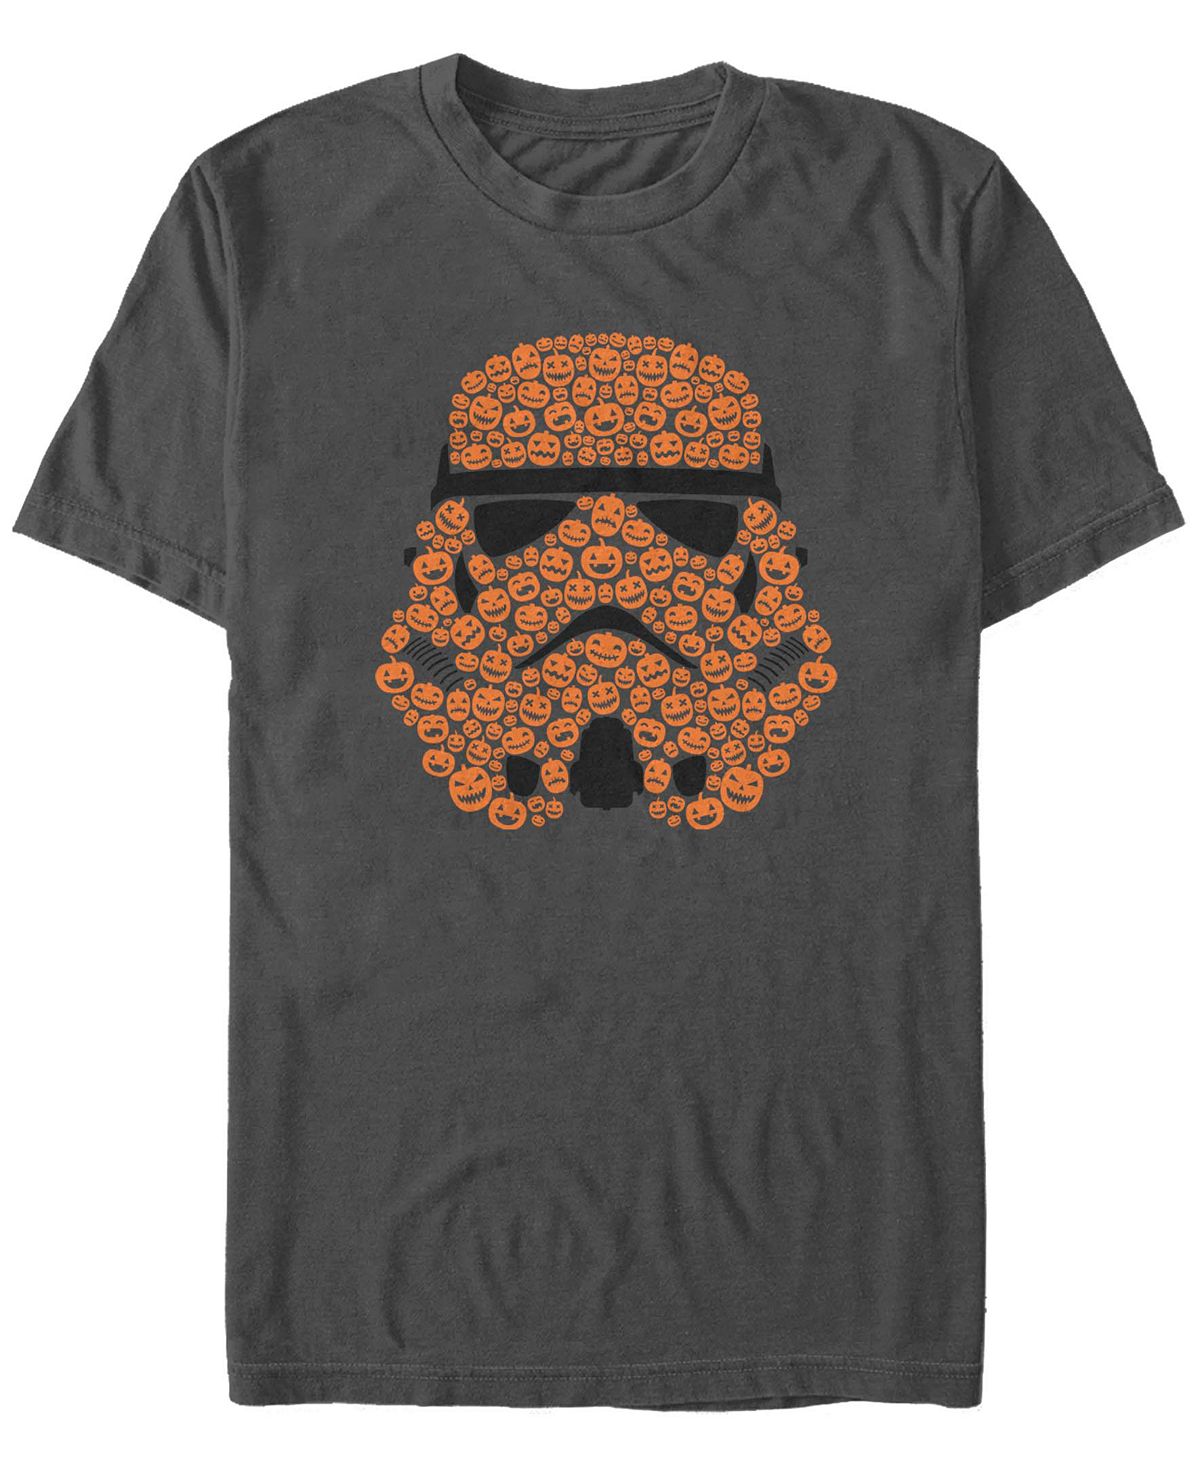 Мужская футболка с коротким рукавом Star Wars Trooper Jacko Fifth Sun